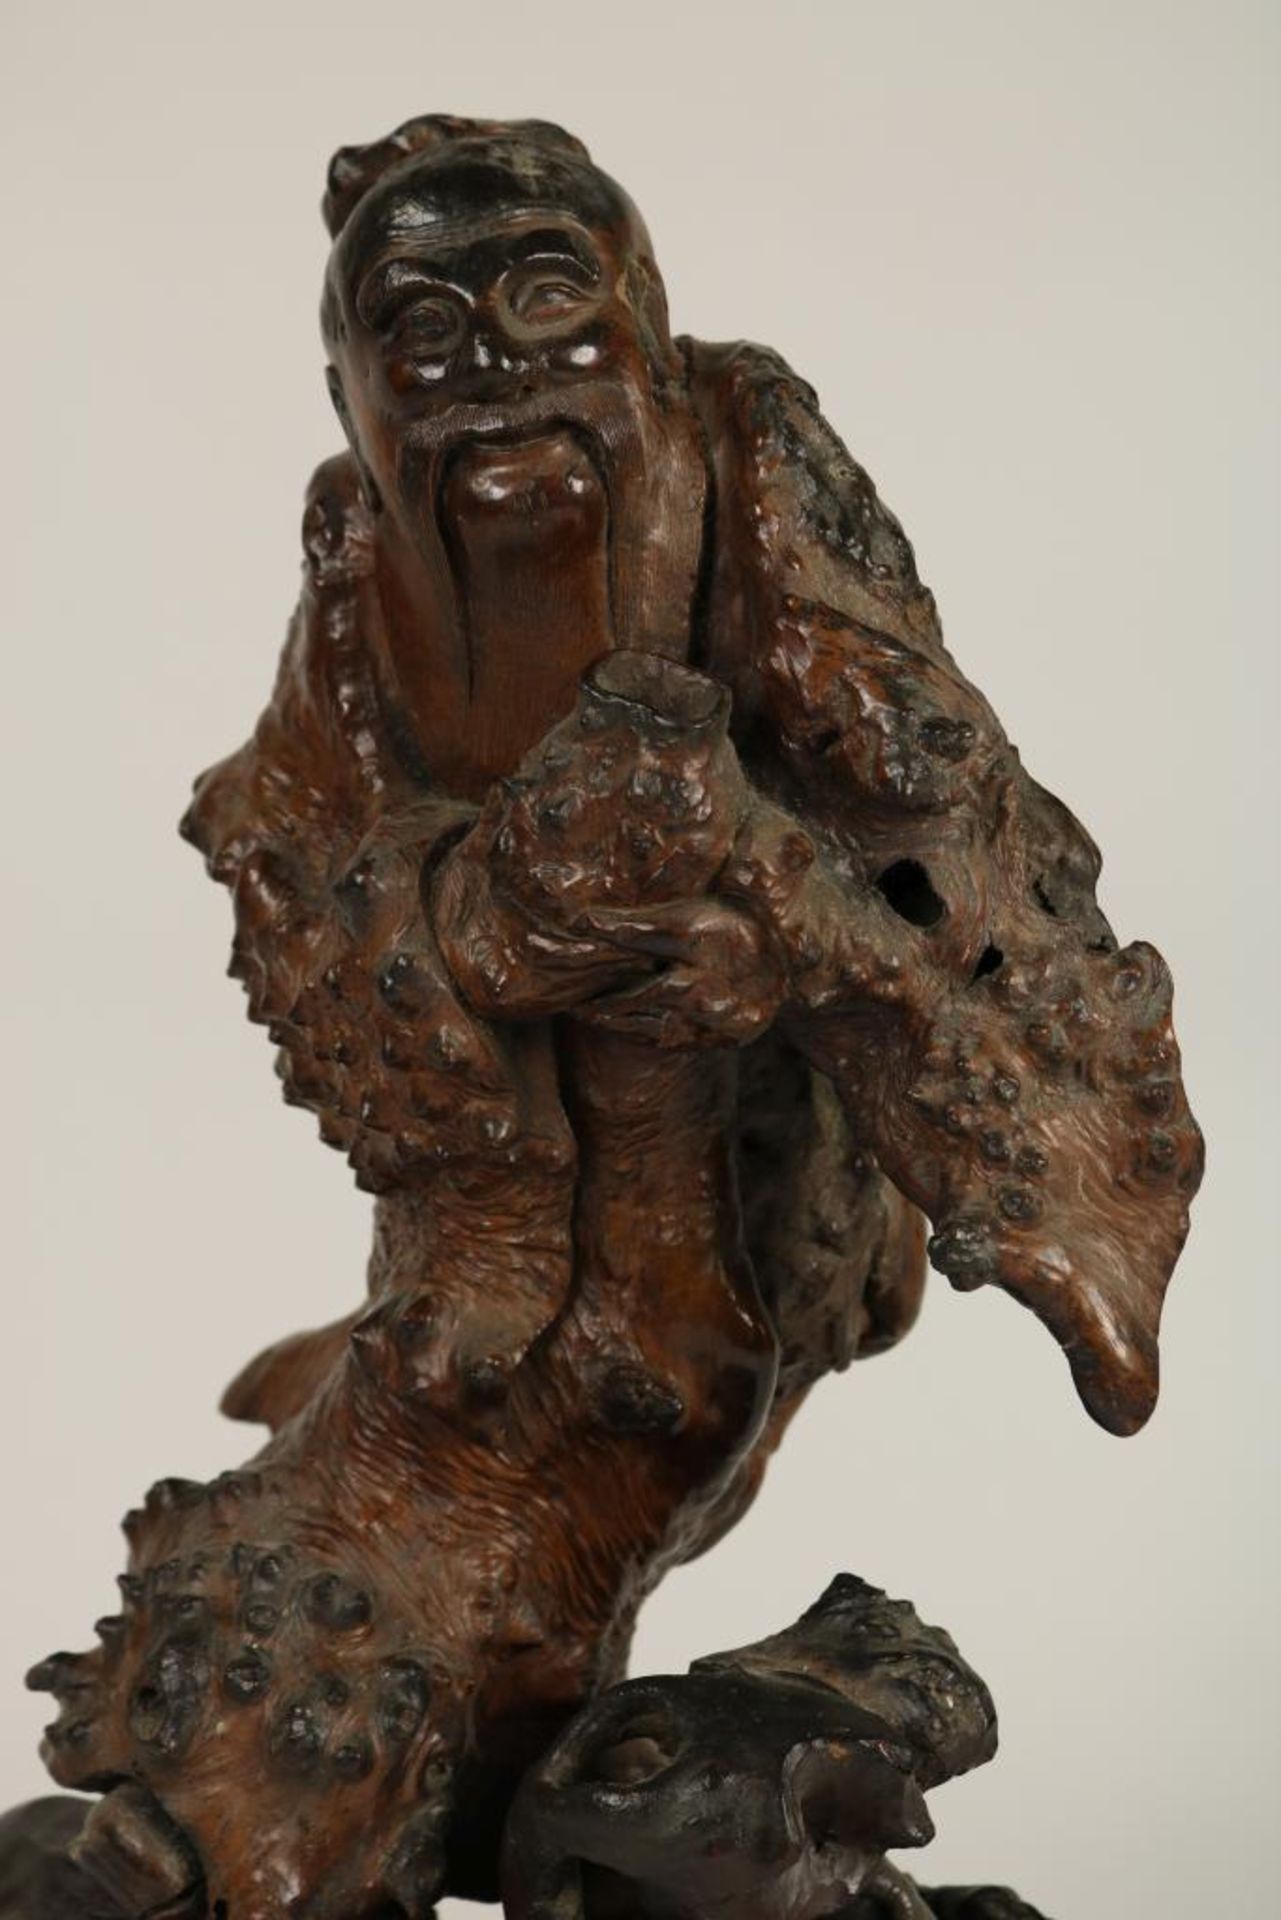 Wooden carved sculpture of Shou Lao, China, h. 50 cm. - Bild 2 aus 4